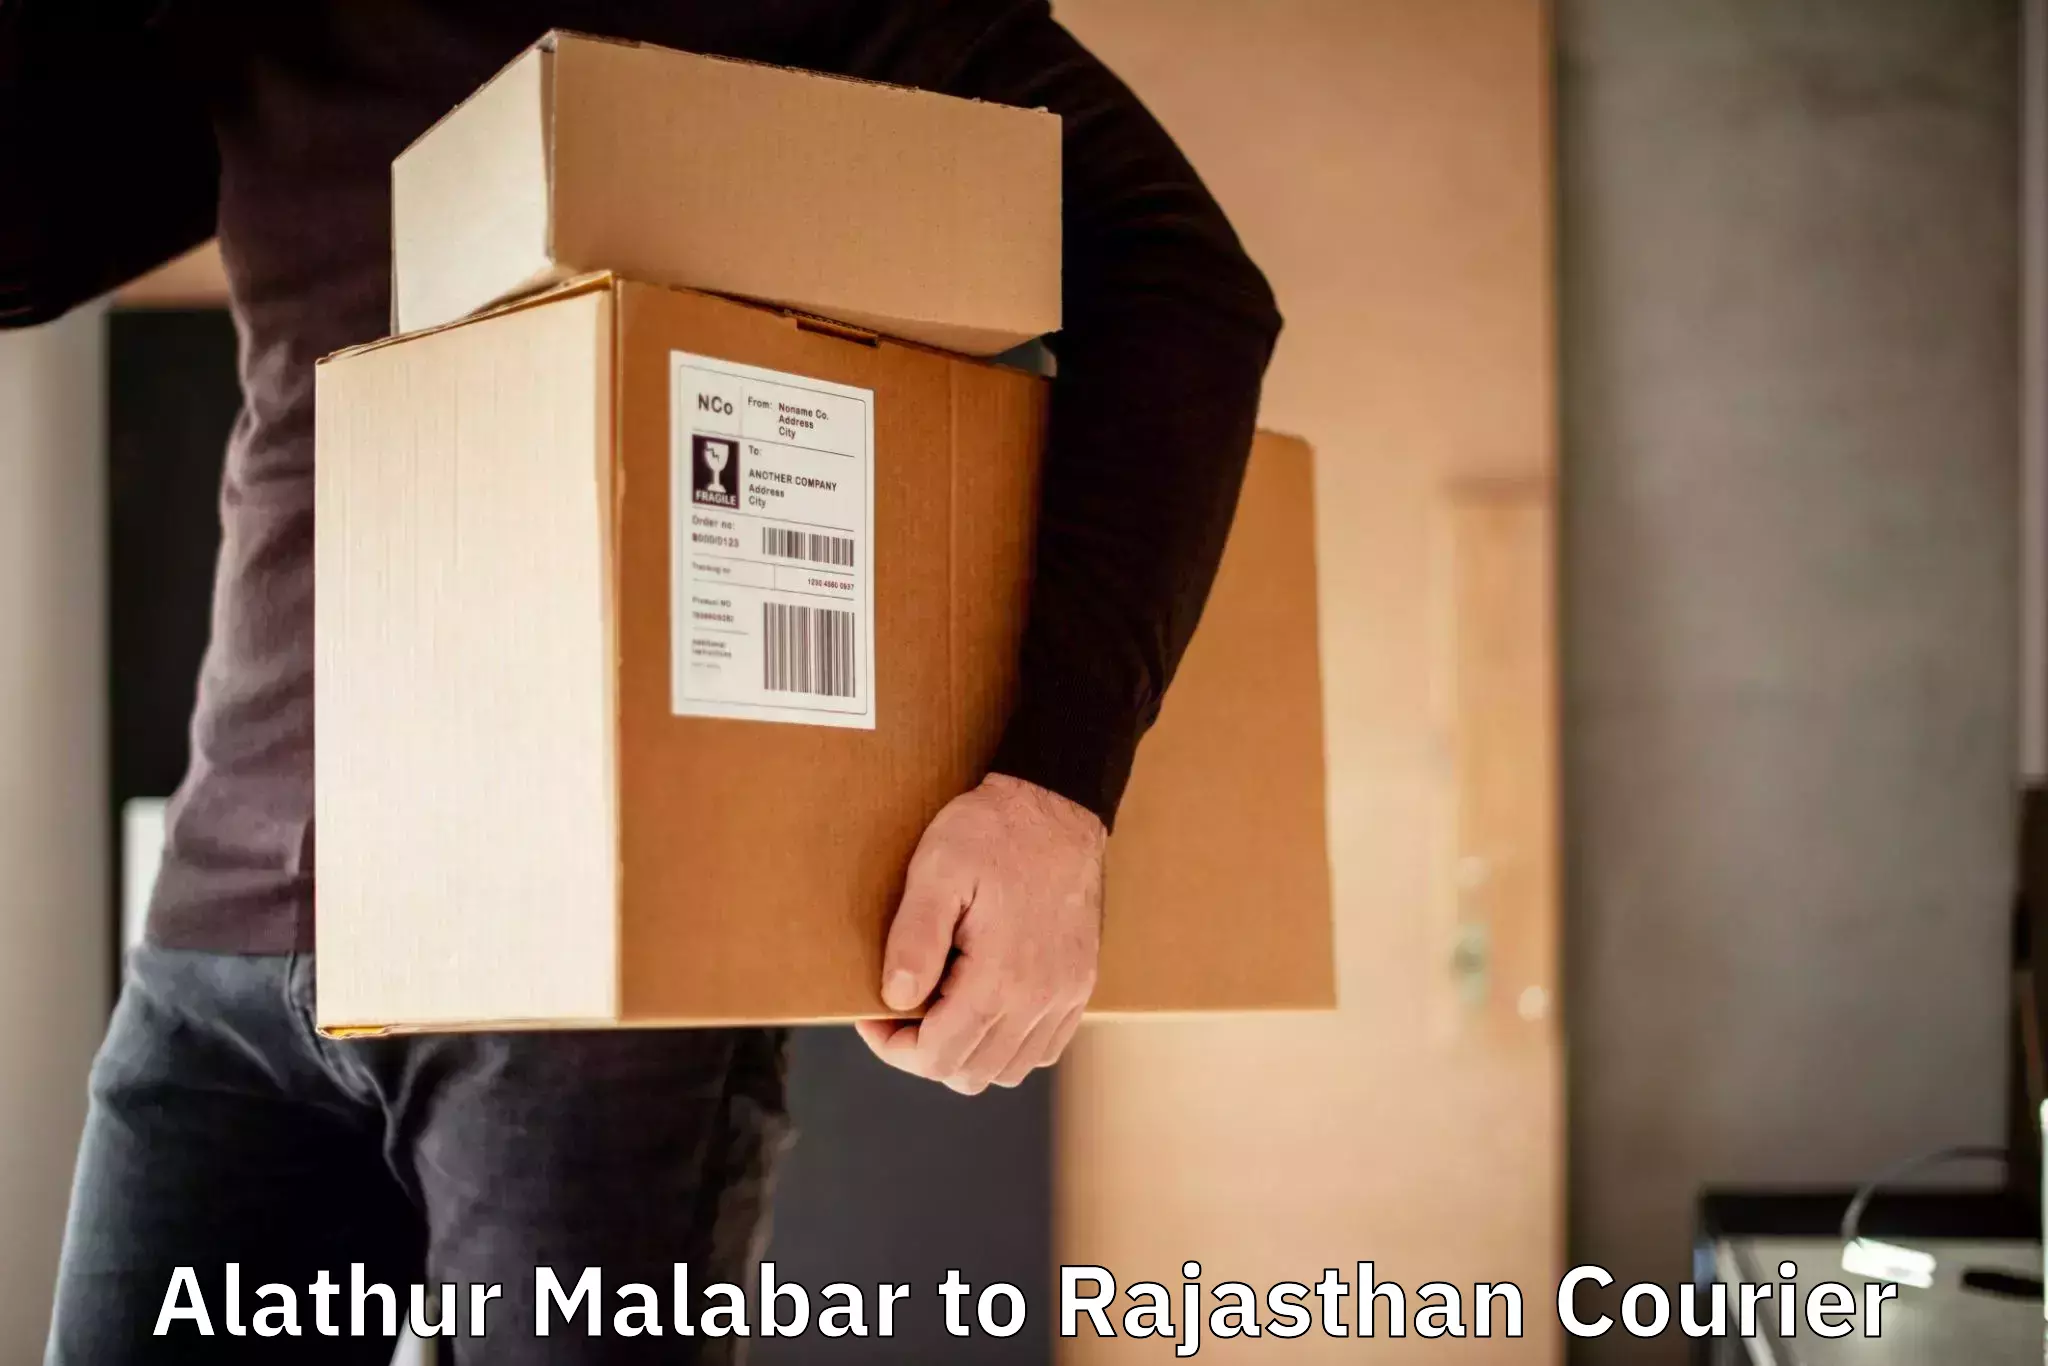 Courier service comparison Alathur Malabar to Kankroli